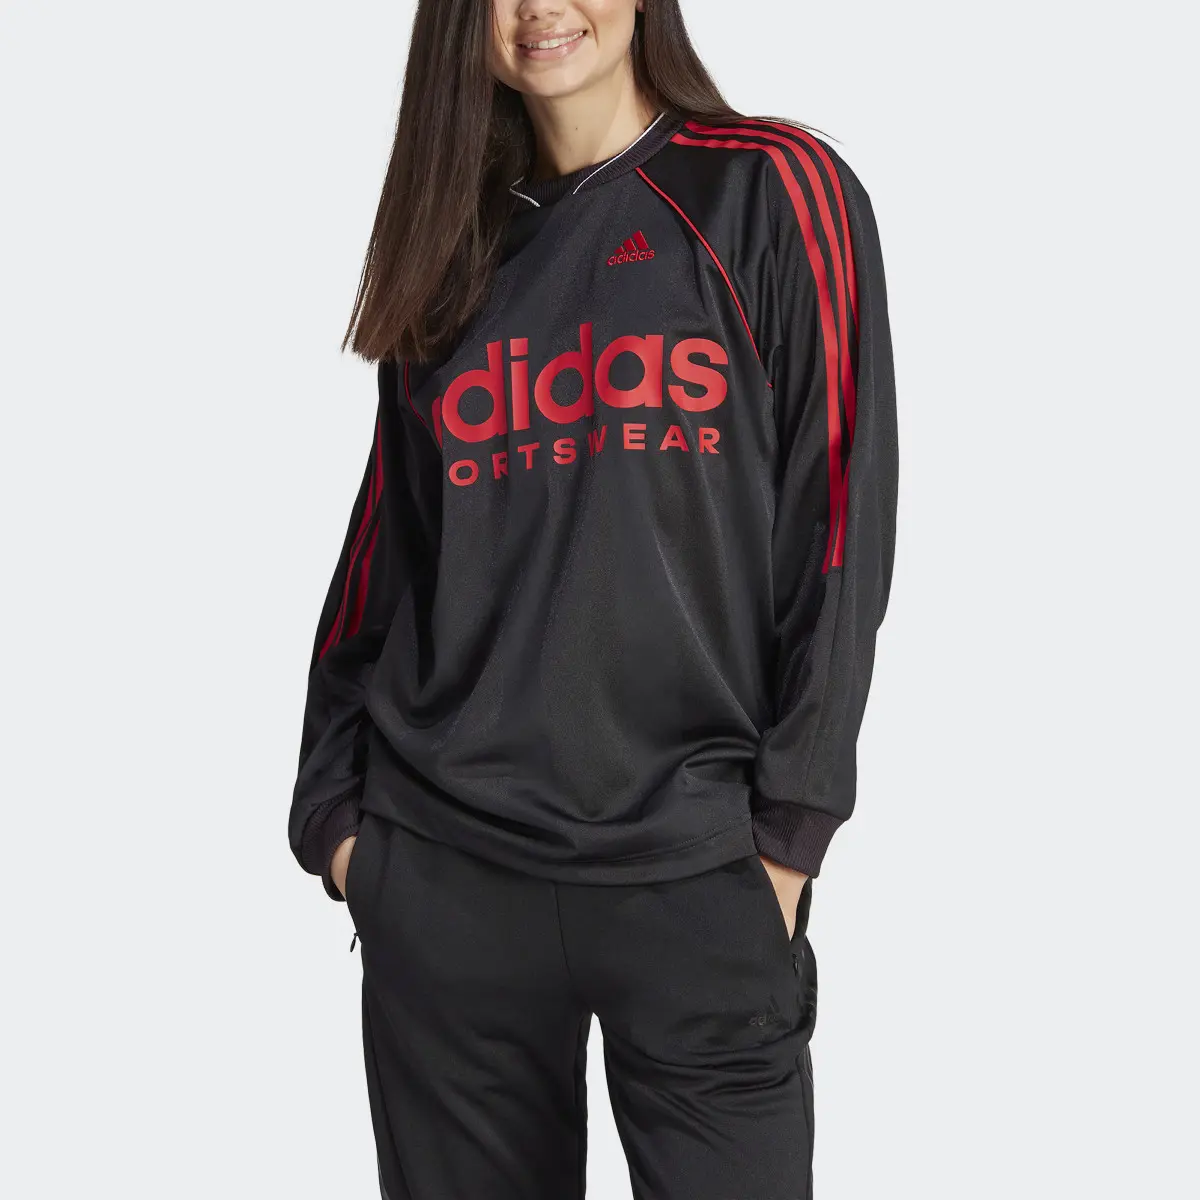 Adidas Jacquard Long Sleeve Jersey. 1